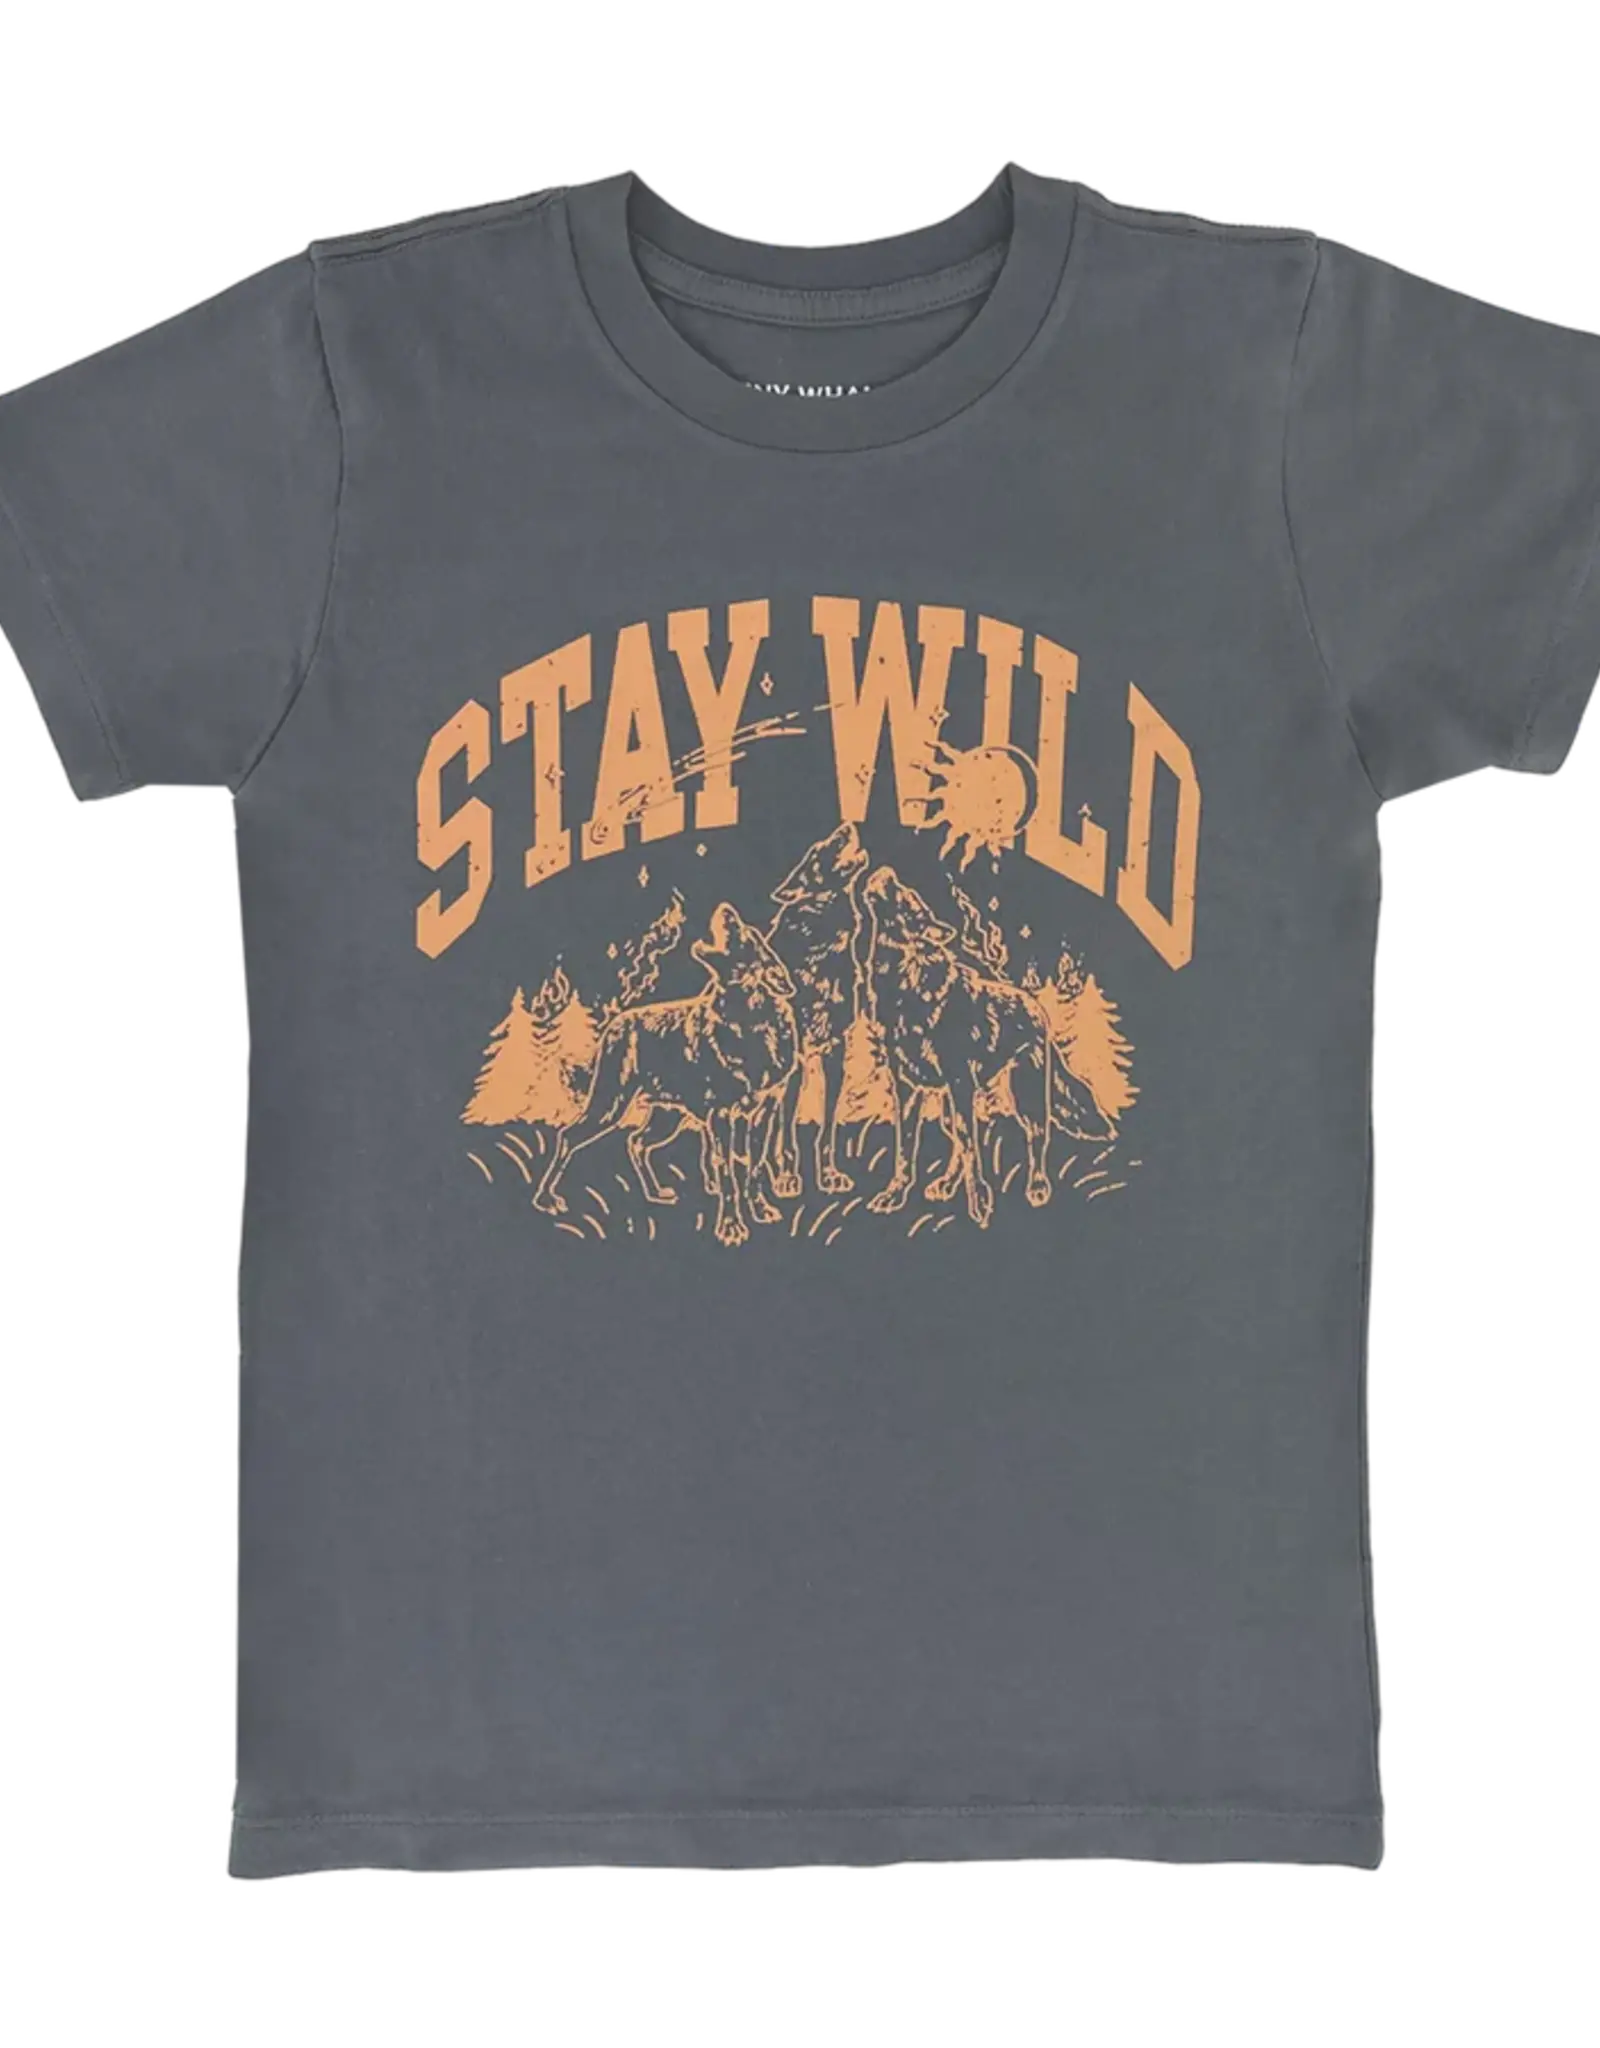 Tiny Whales 8YO: T-Shirt - Stay Wild